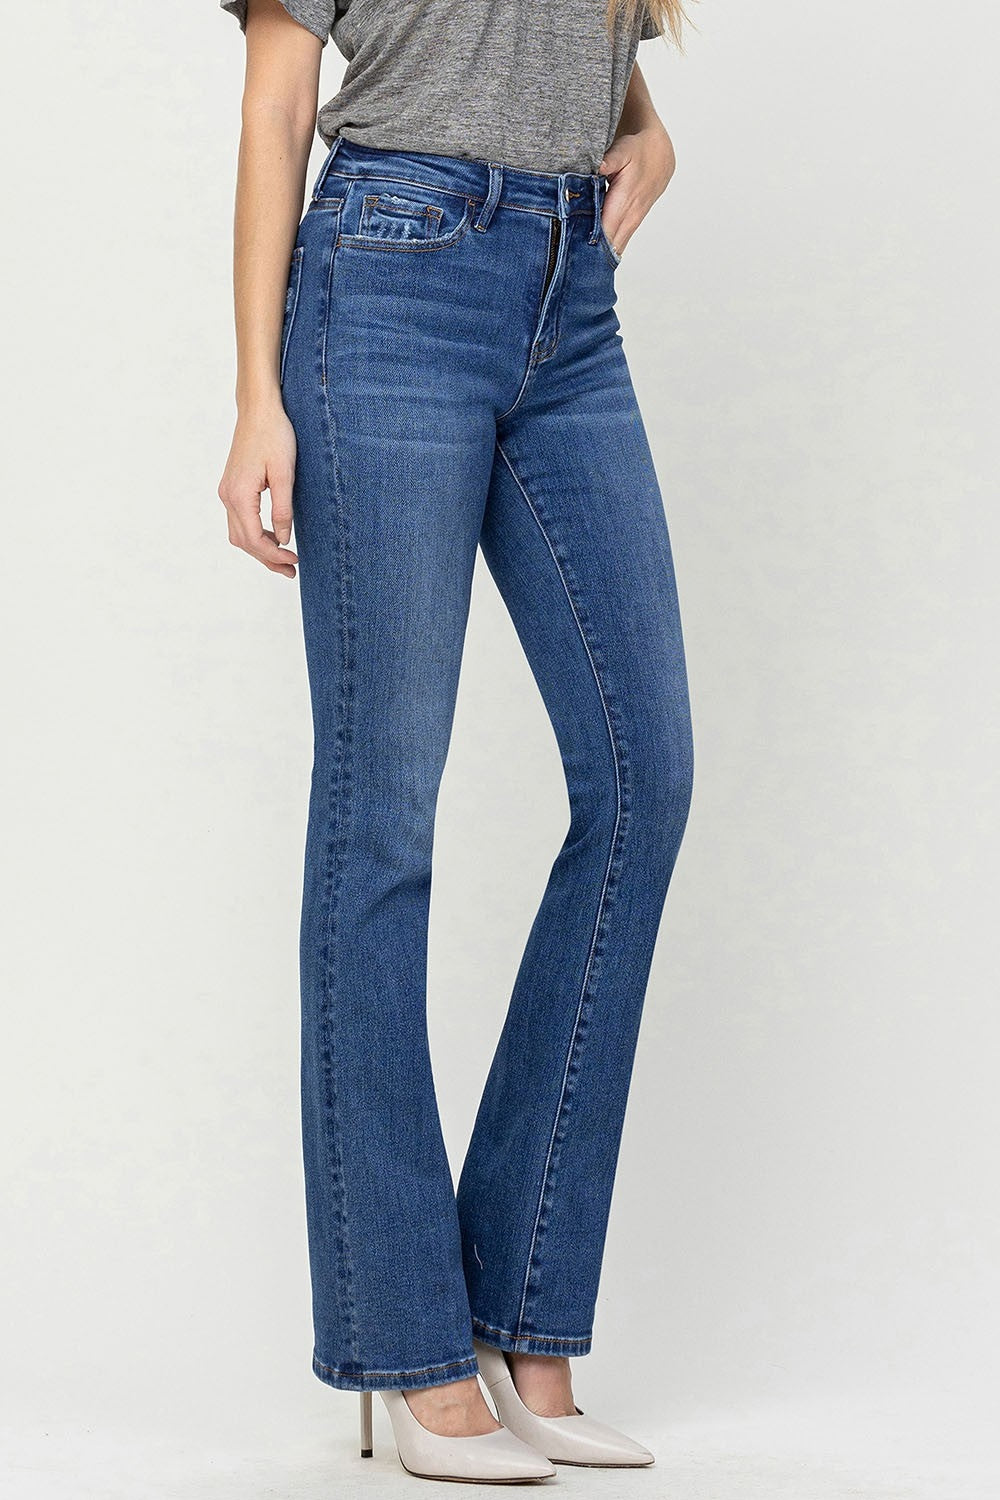 KESLEY  High Waist Bootcut Jeans Premium Luxury Cotton Denim Pants